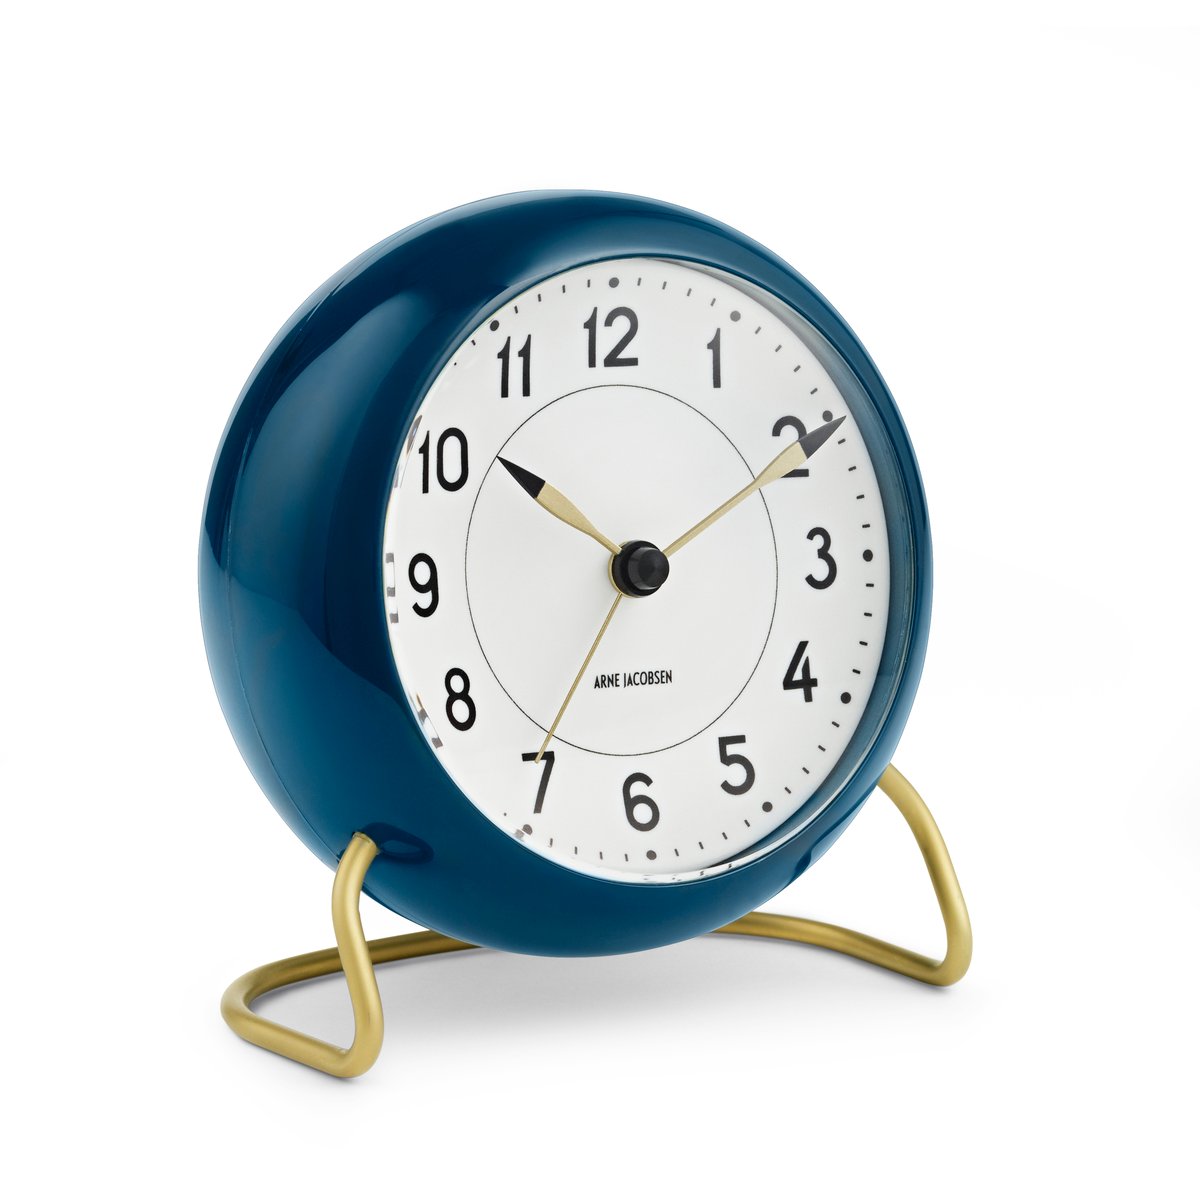 Arne Jacobsen Clocks AJ Station bordur petrolblå petrolblå (5709513436782)